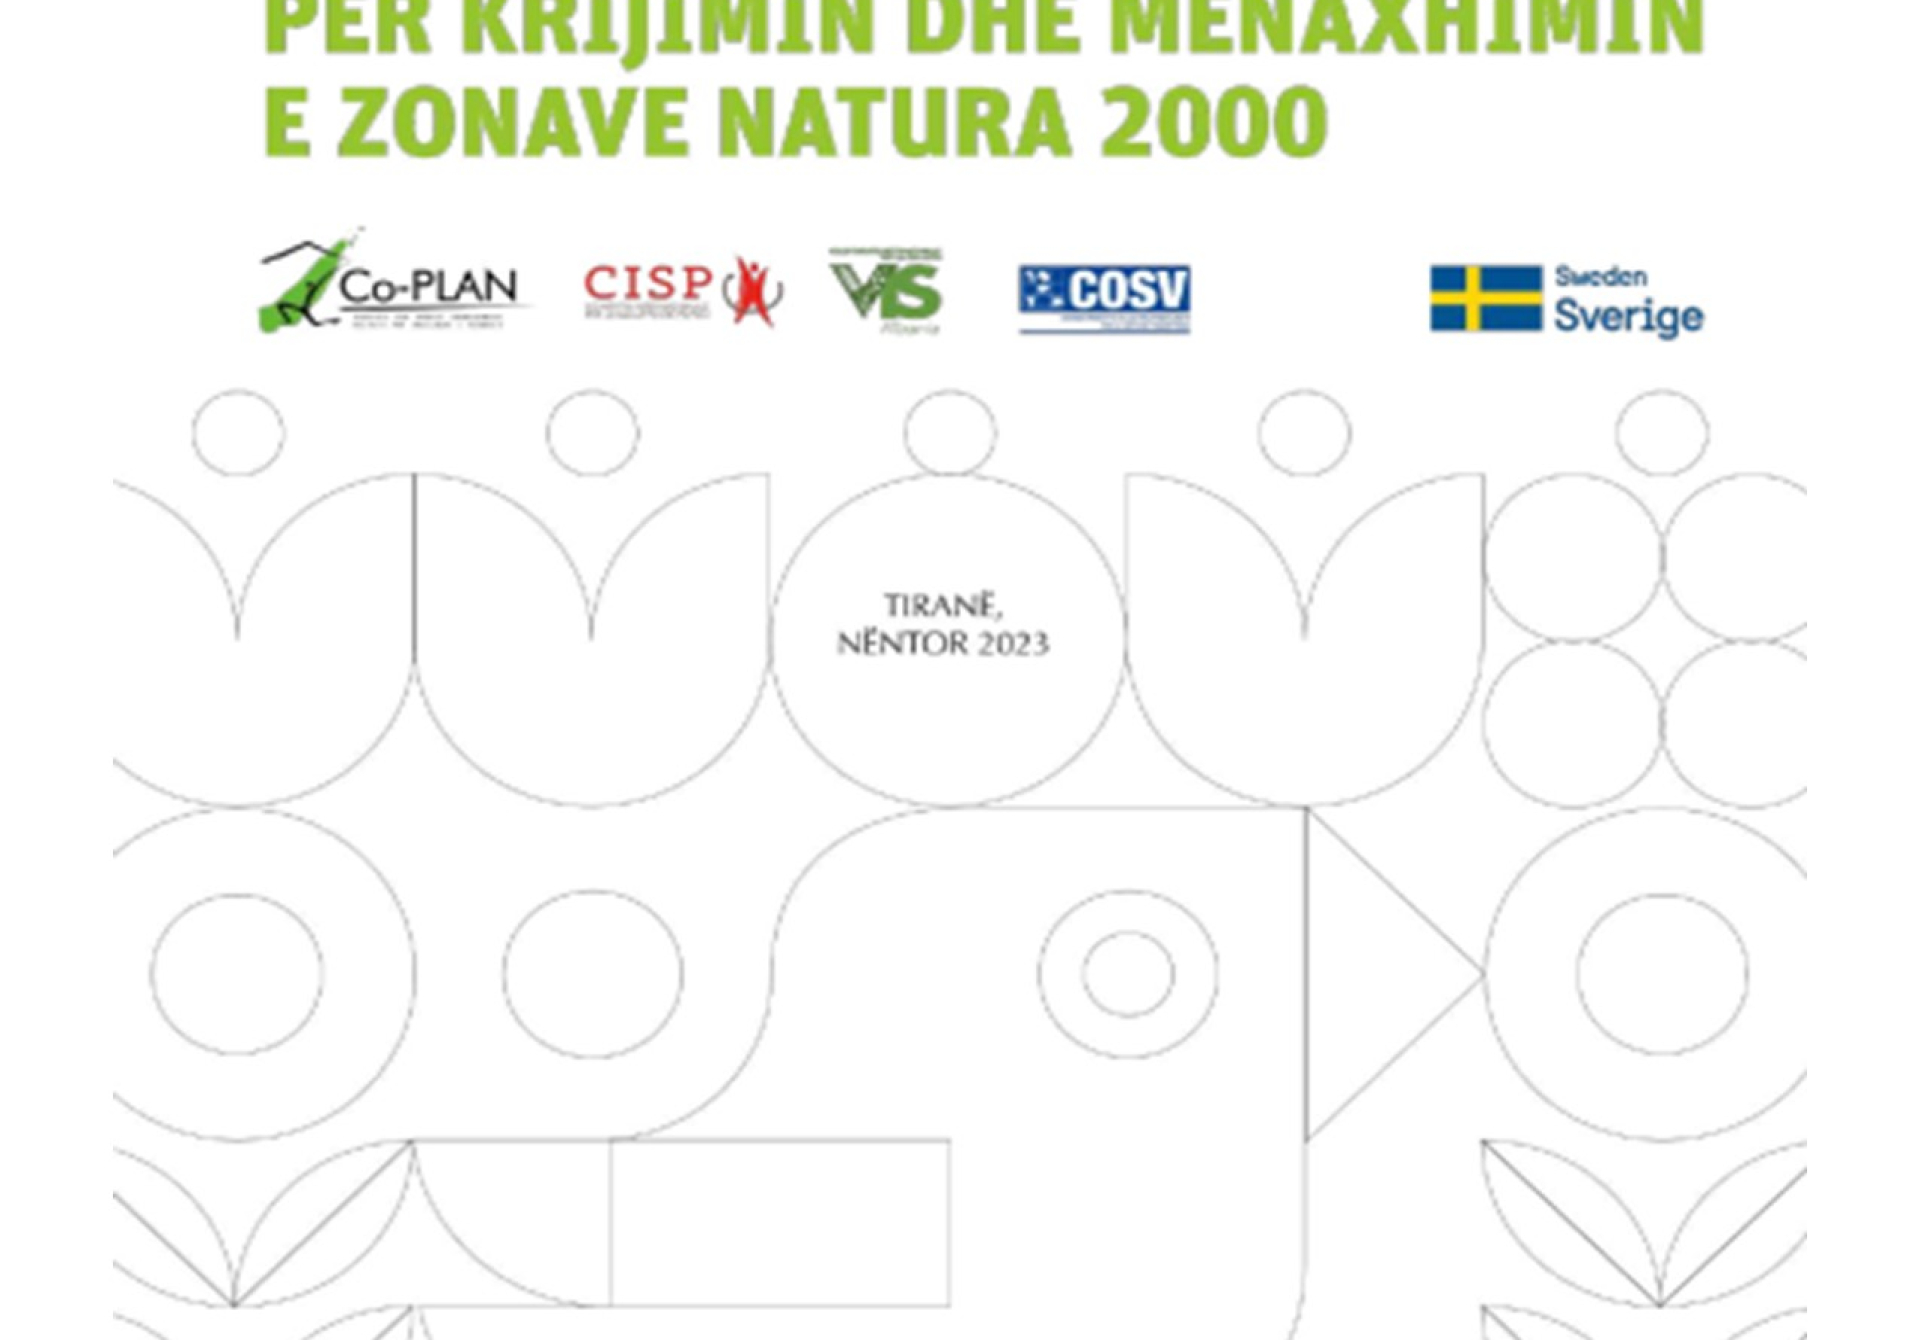 Rekomandimet procesi Natyra 2000